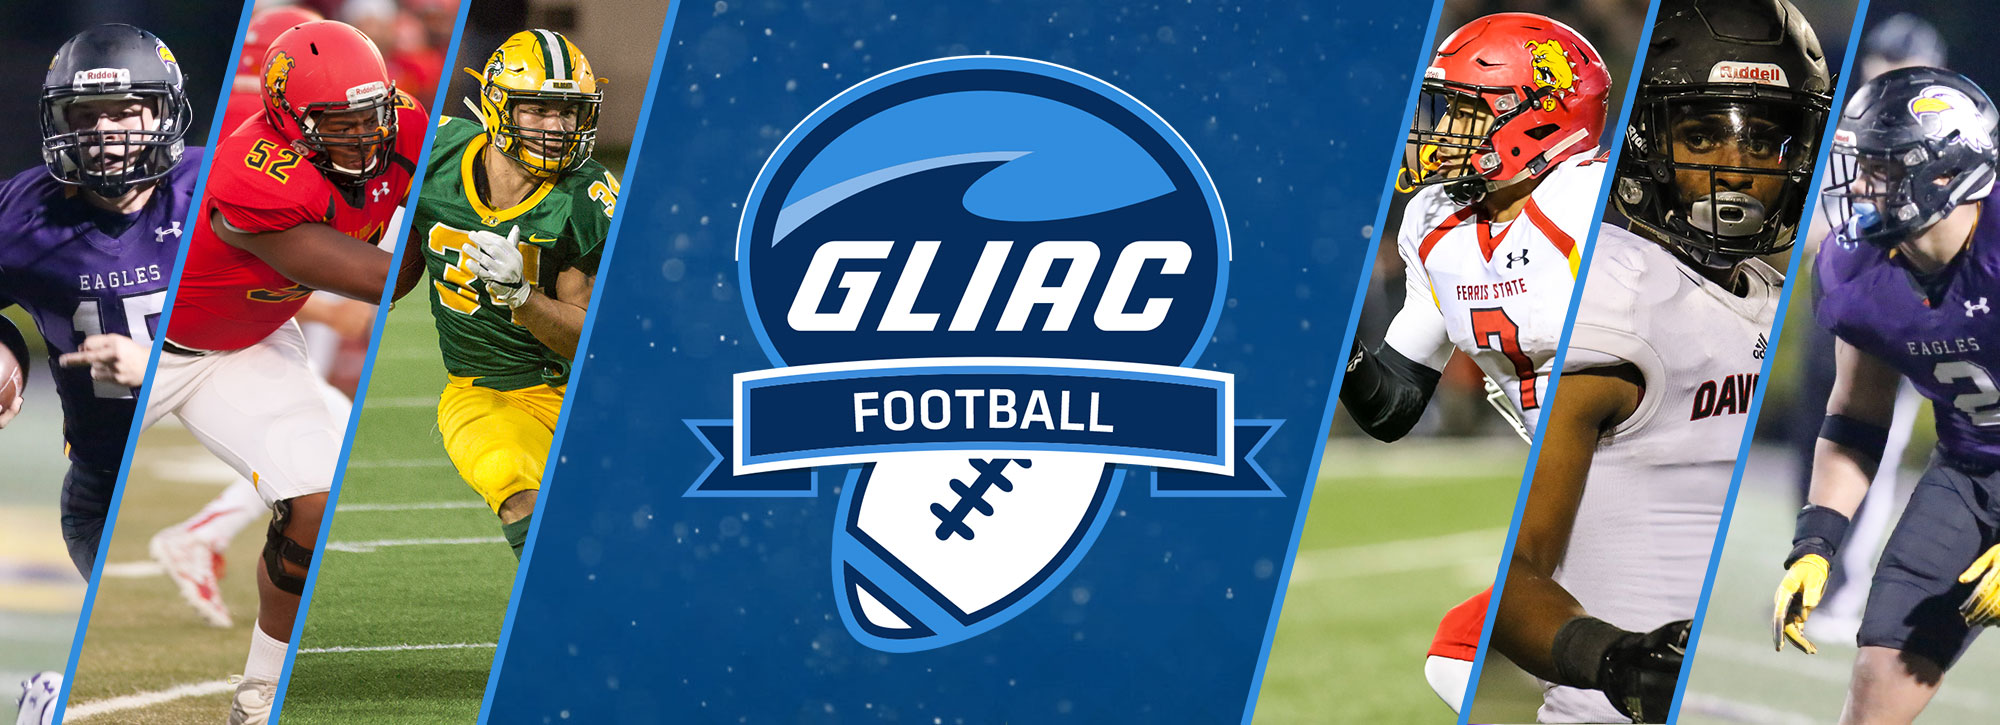 2018 All-GLIAC Football Teams, Player of the Year Awards Announced